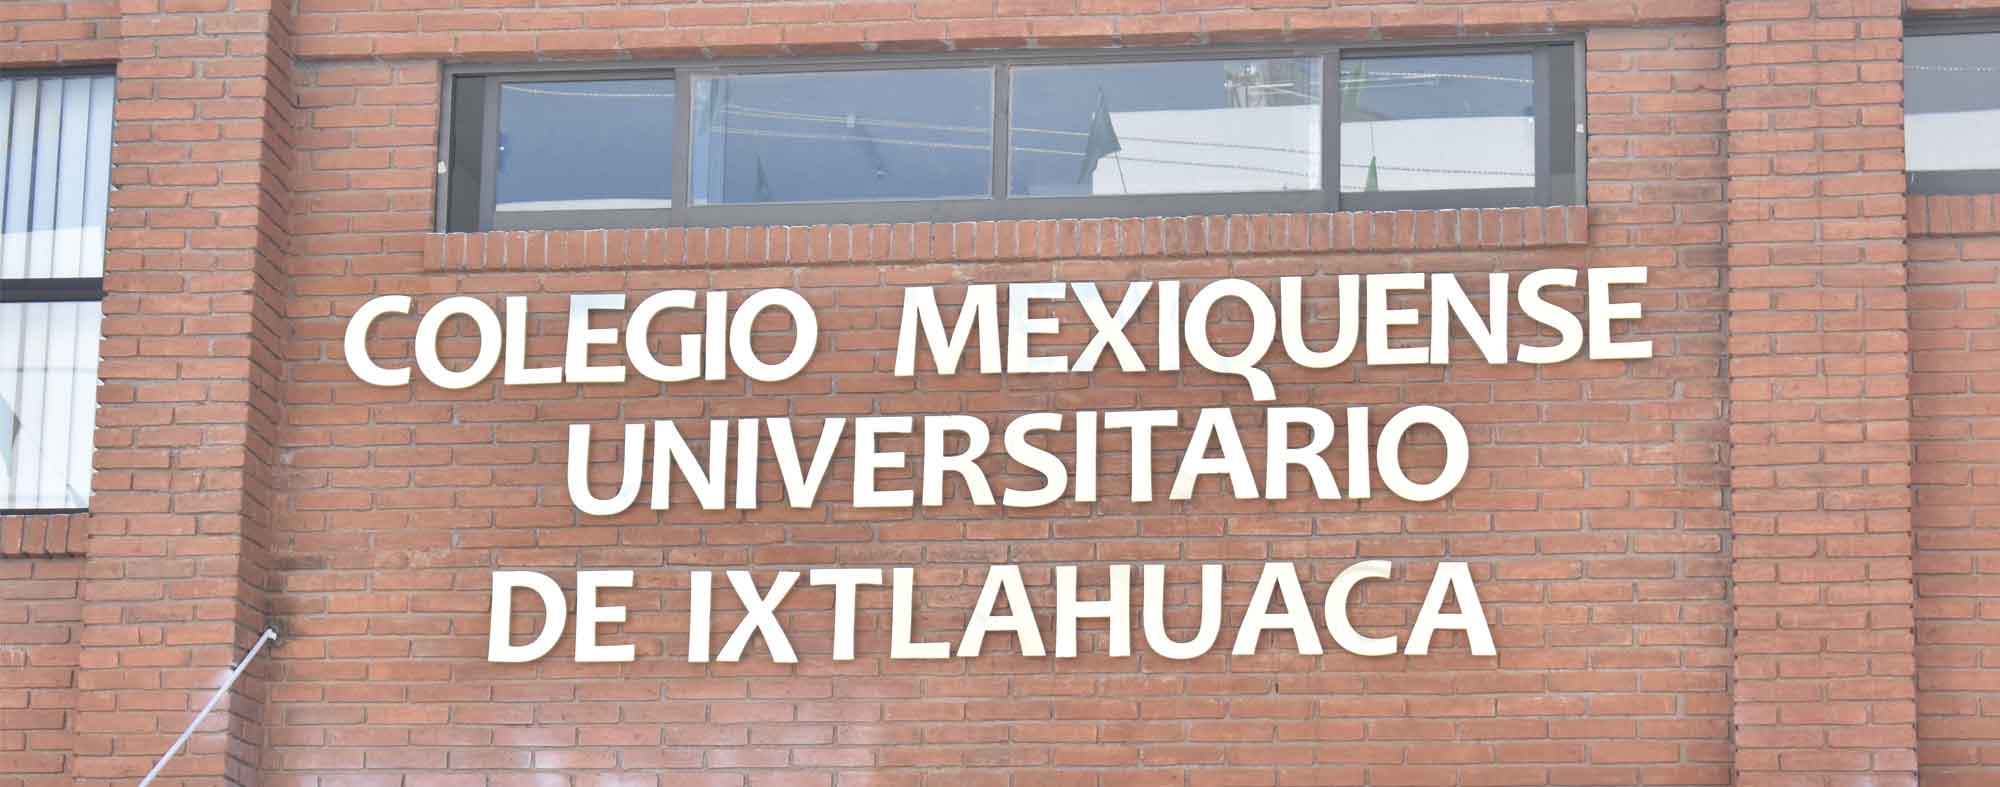 Grupo Colegio Mexiquense Universitario de Ixtlahuaca